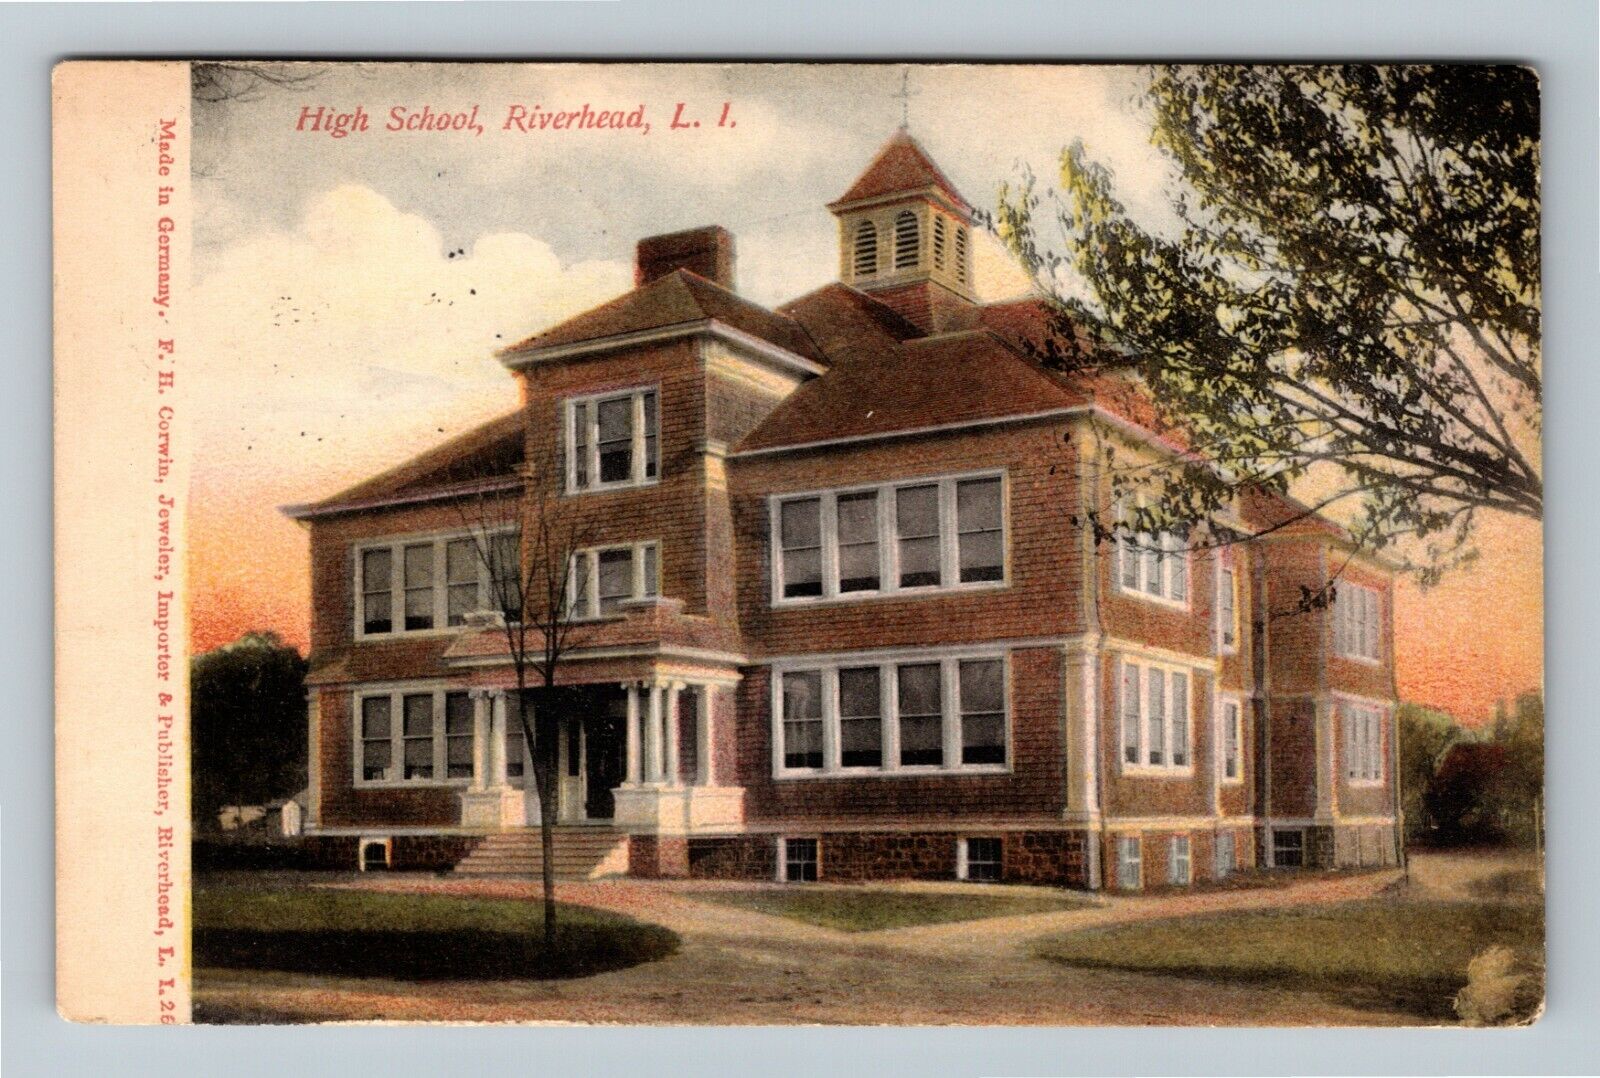 Riverhead Long Island NY-New York, High School, c1906 Vintage Postcard